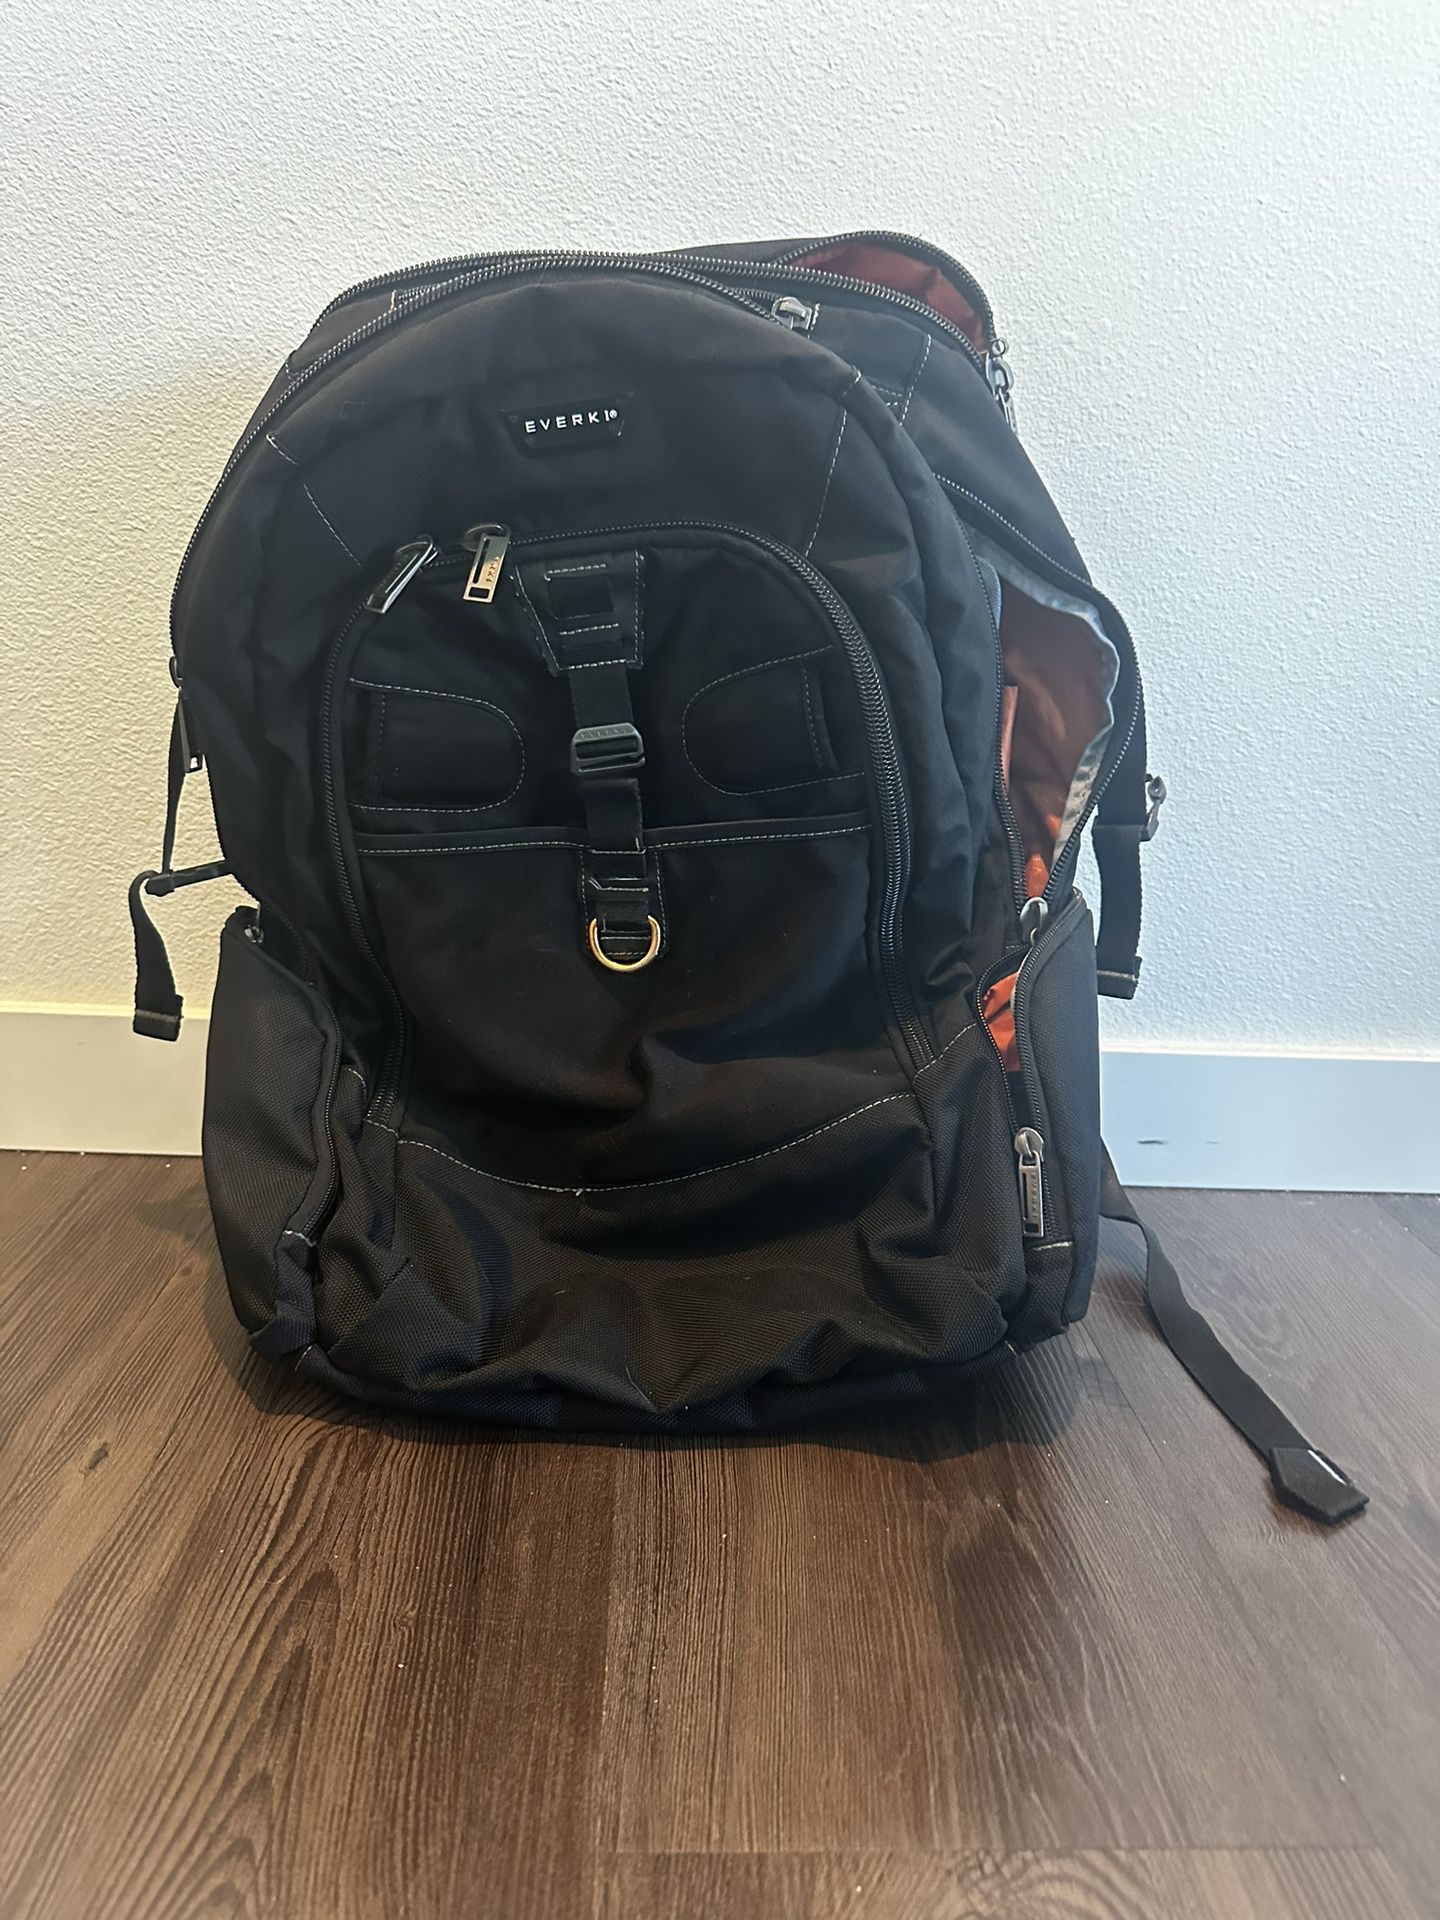 Everki Titan Laptop Backpack